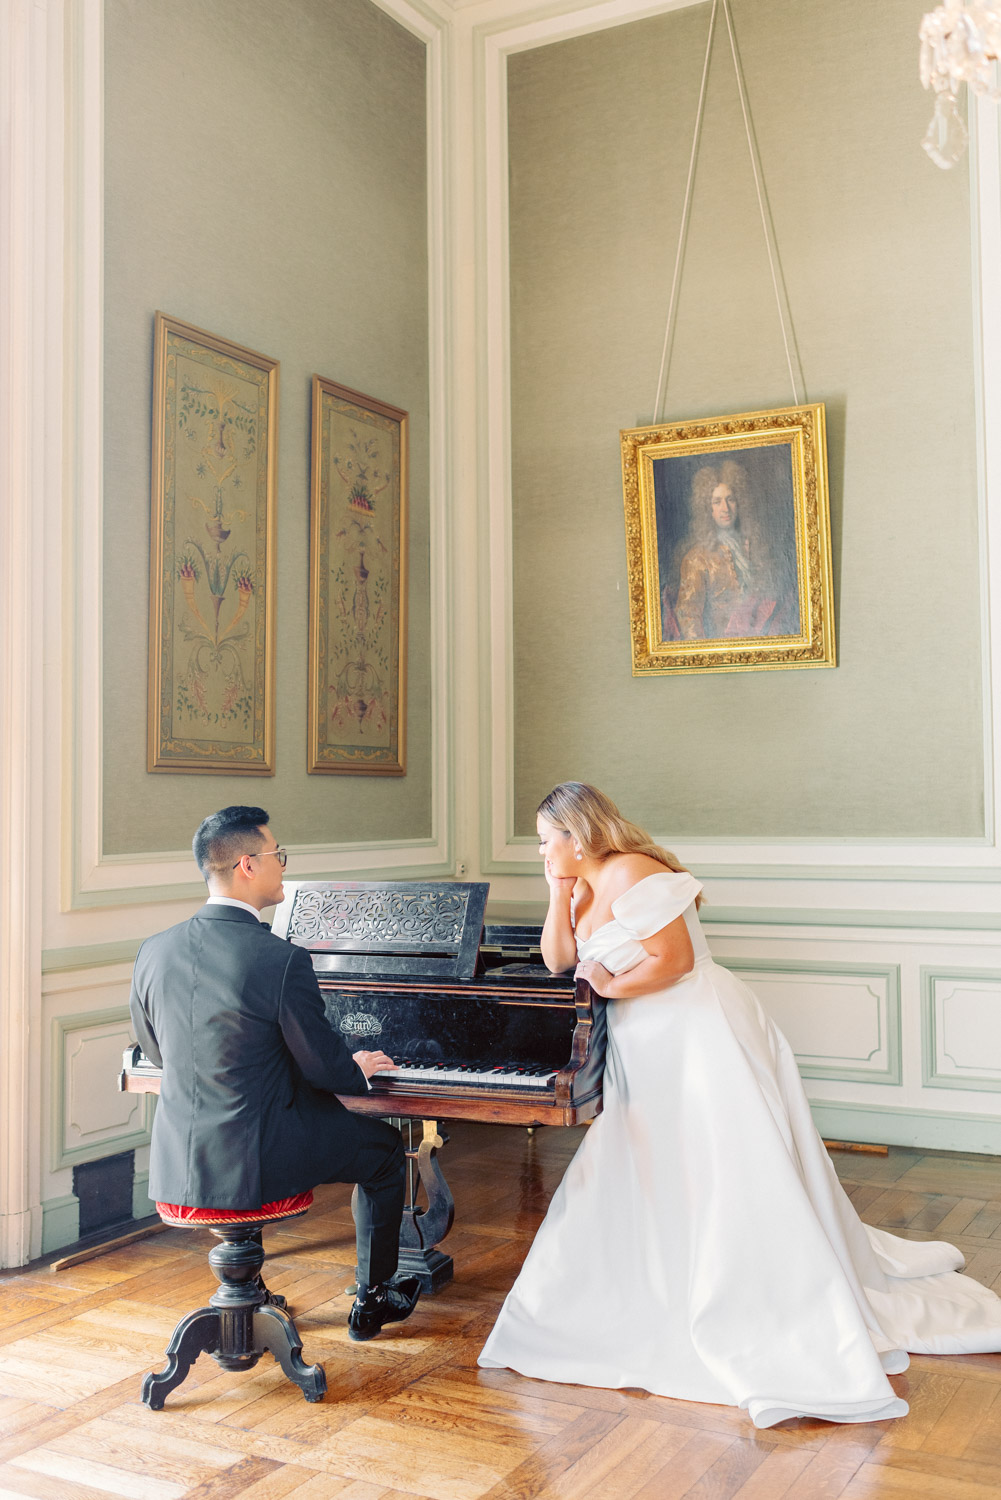 Fine Art Destination Wedding Photographer Europe | Nicole Mihelic | Chateau de Baronville Paris Wedding